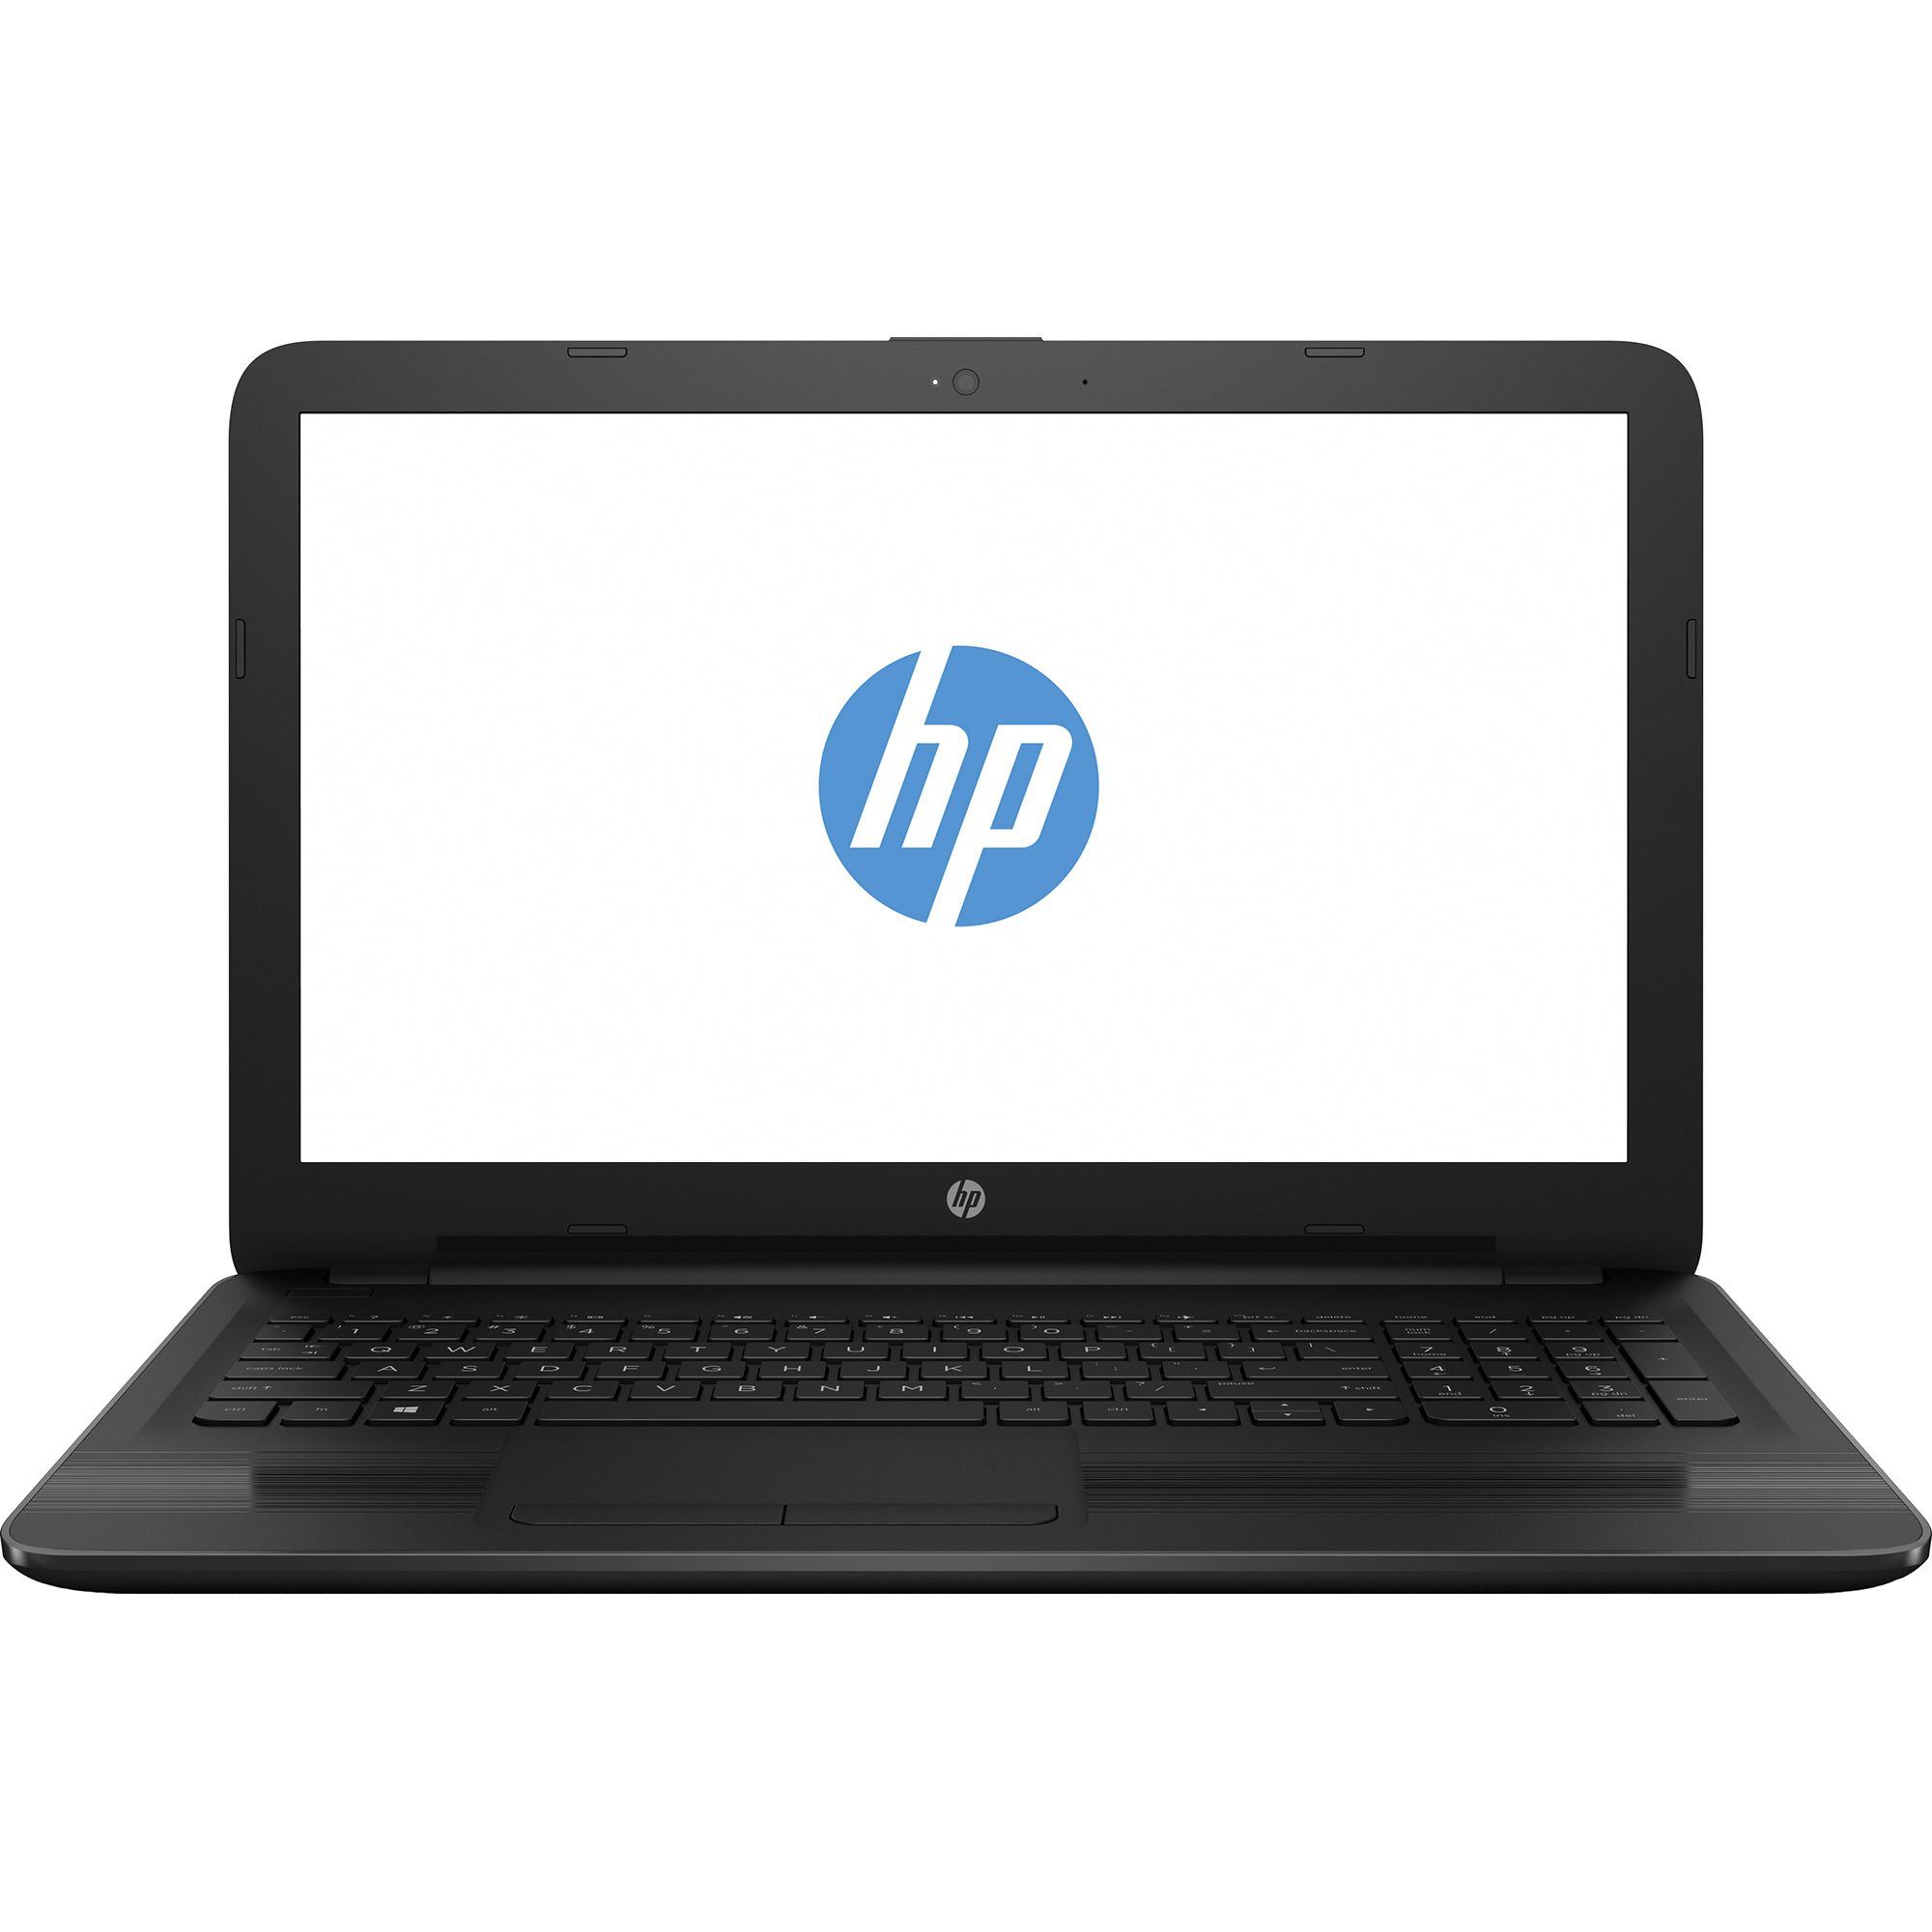 Laptop HP W8Z39EA, Intel Core i5-6200U, 4GB DDR3, HDD 500GB, AMD Radeon R5 M430 2GB, Free DOS